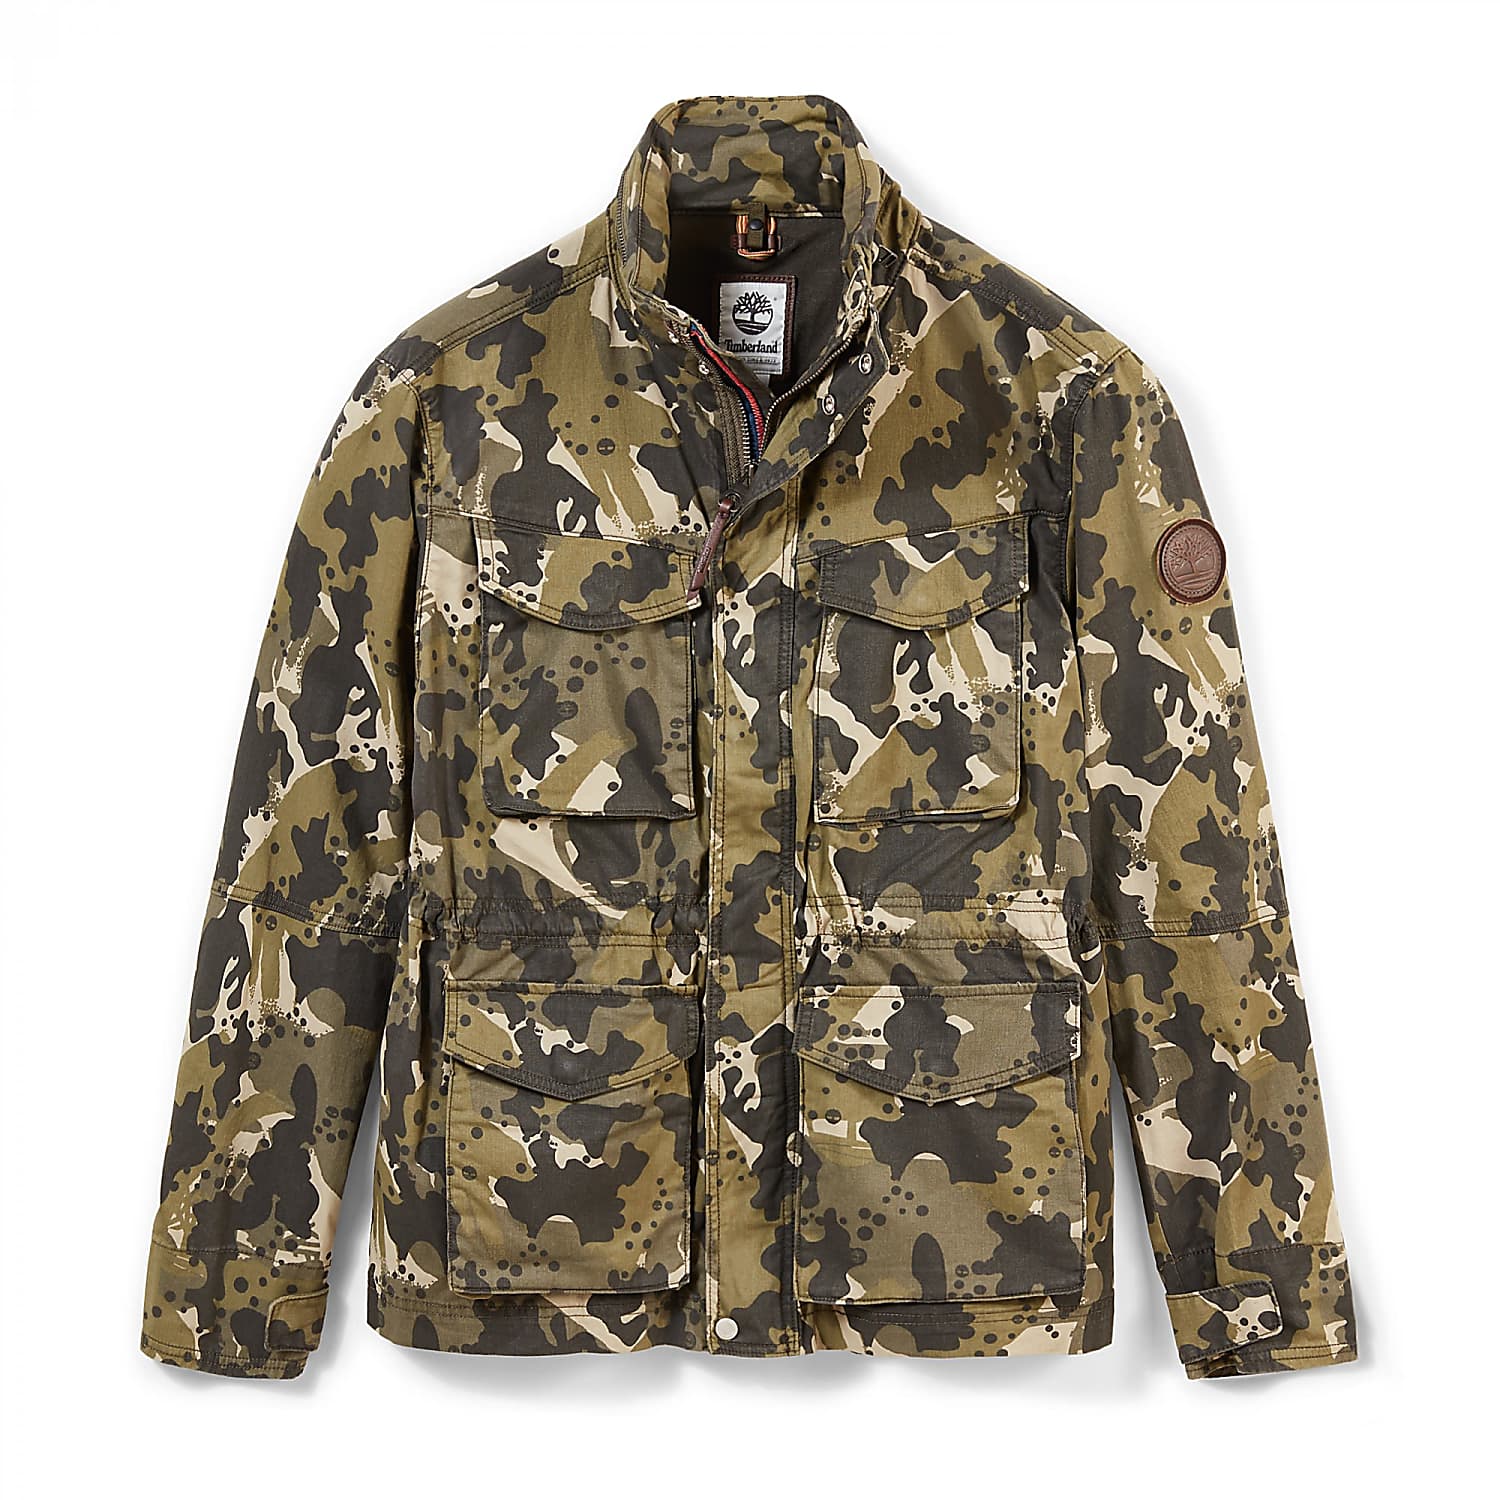 timberland crocker mountain m65 jacket